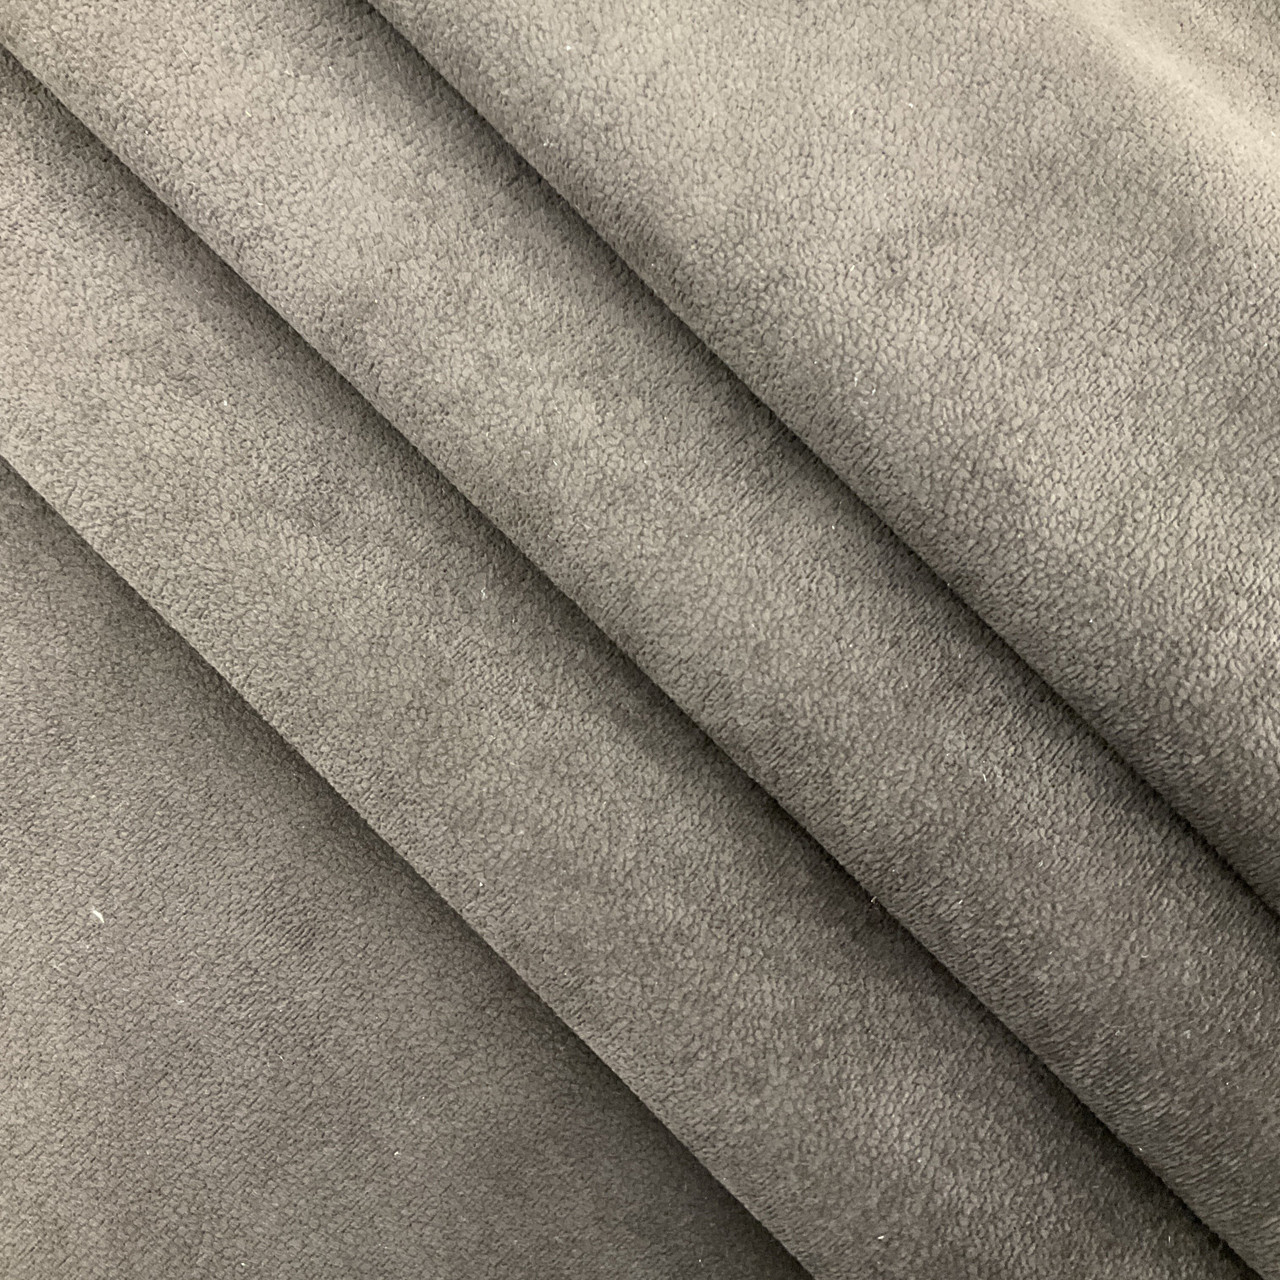 Dark Brown, Soft Microfiber, Upholstery Fabric, 54 Wide